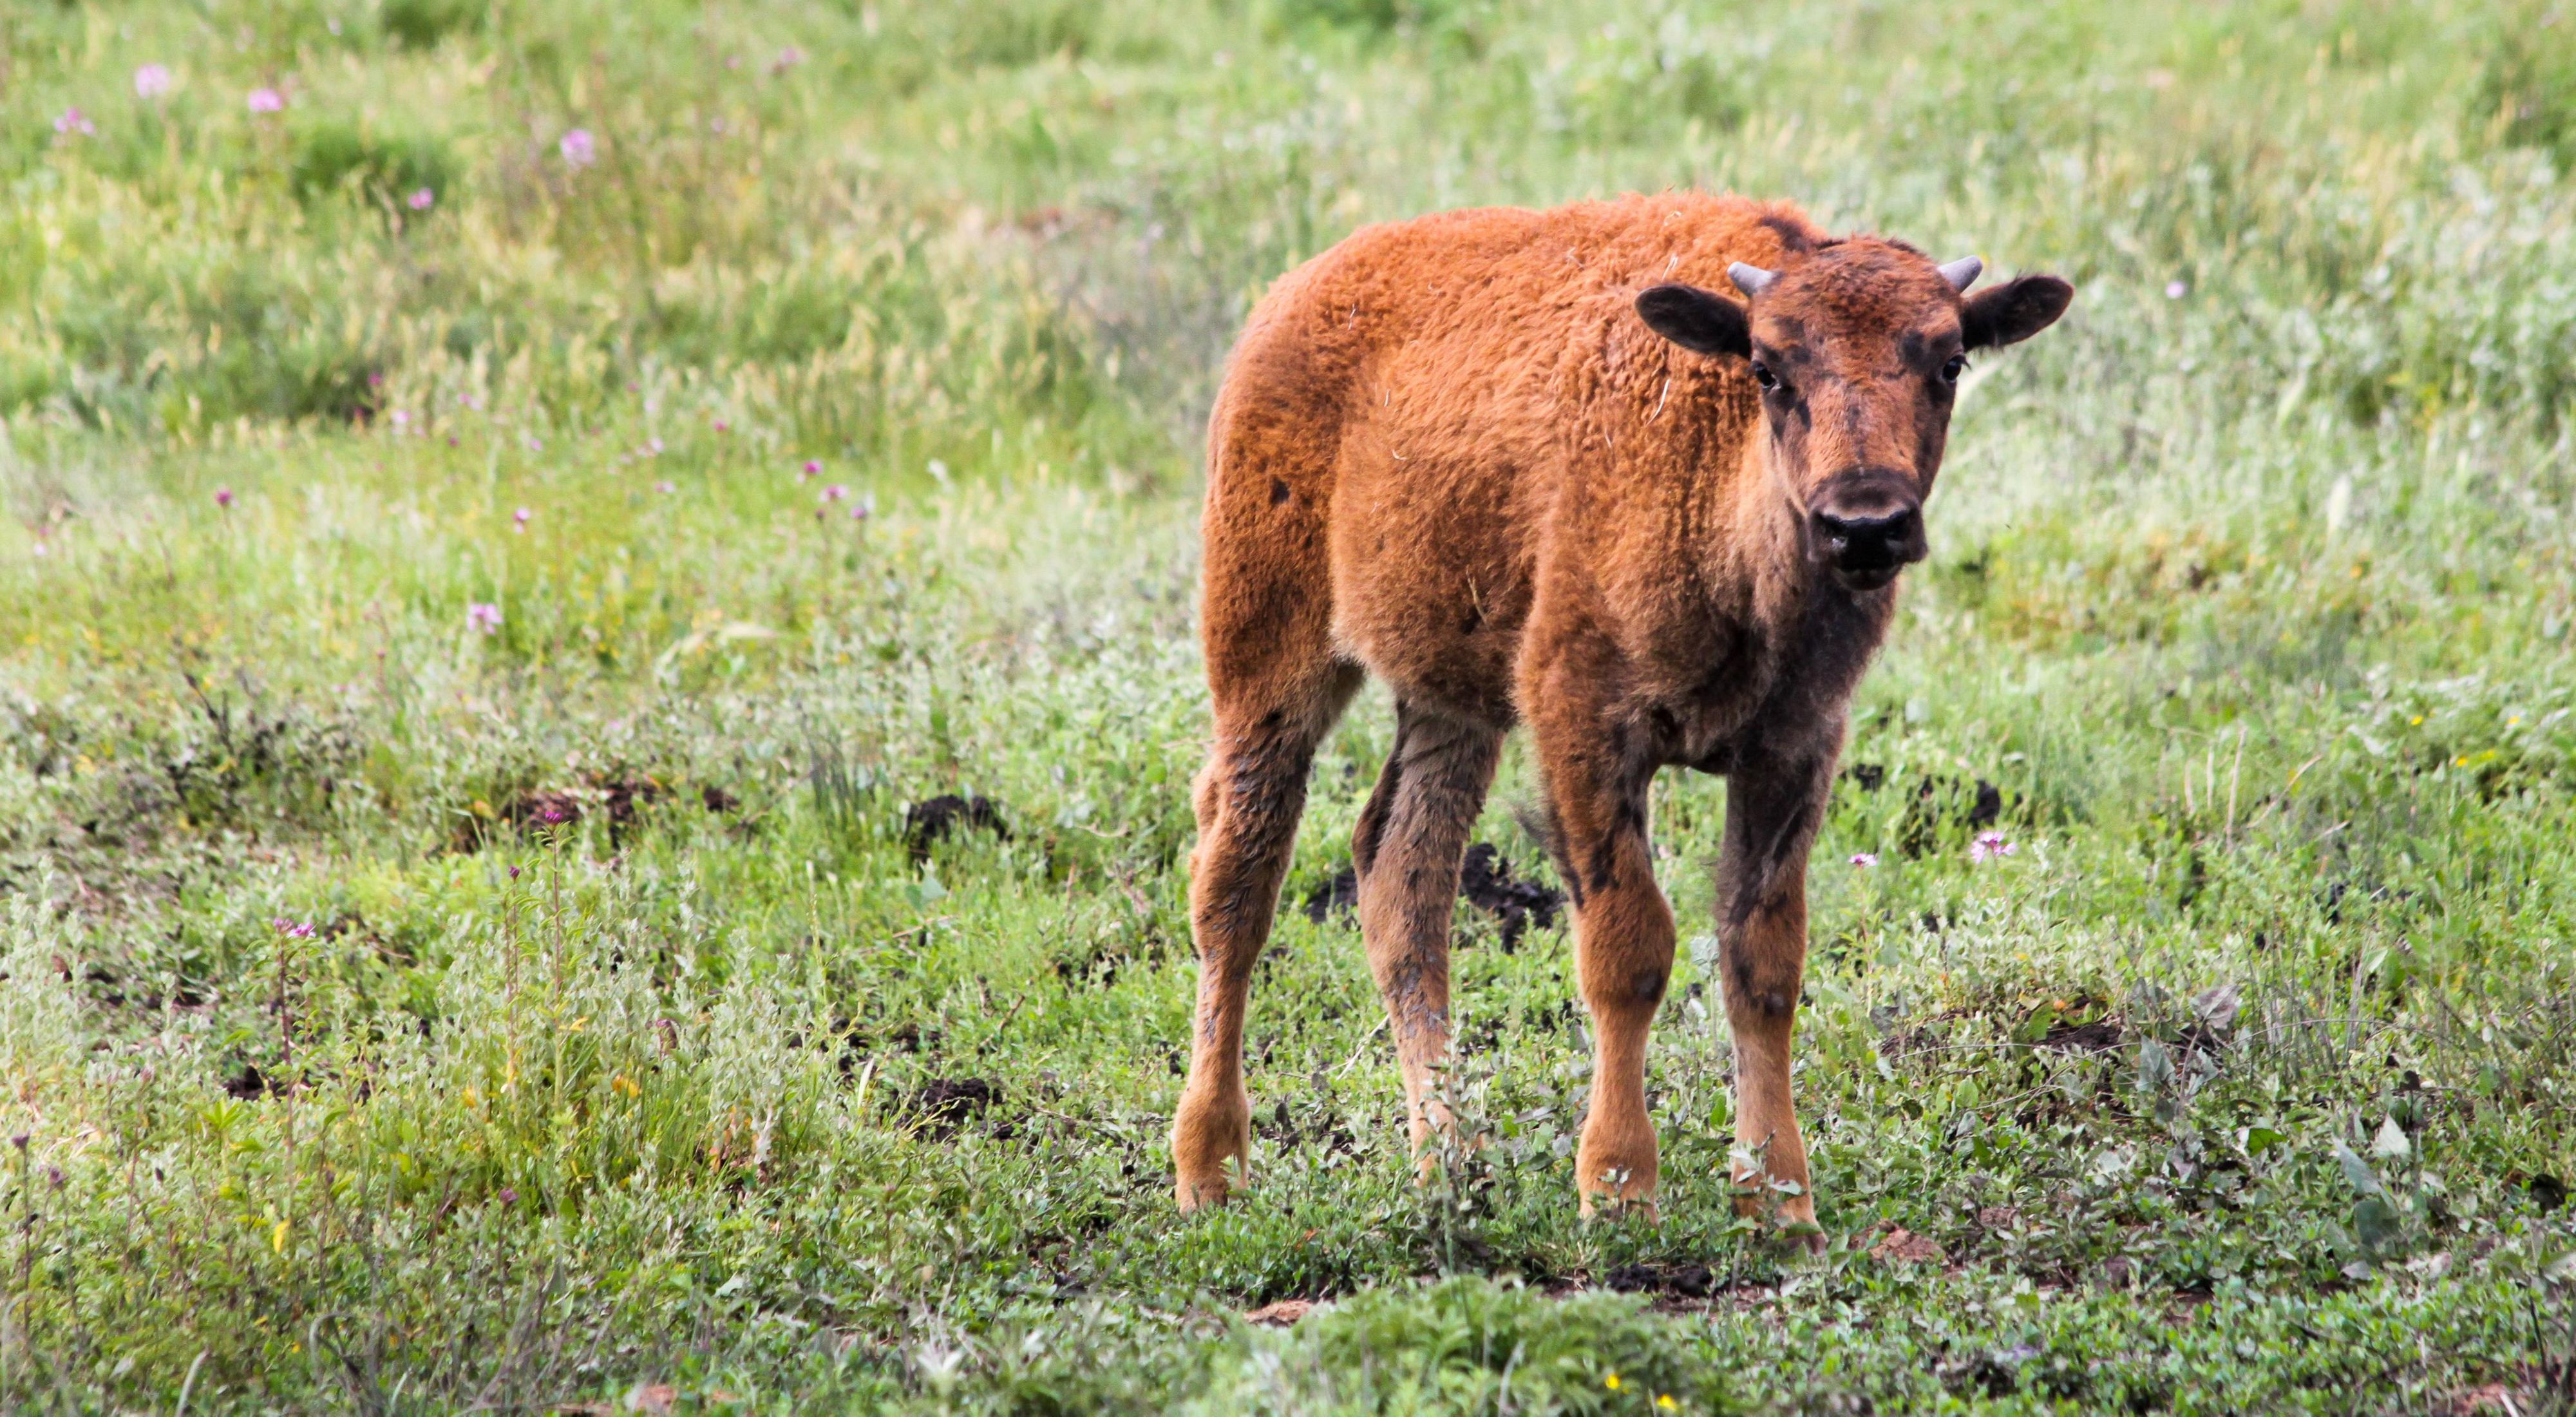 A bison calf in a grassland.